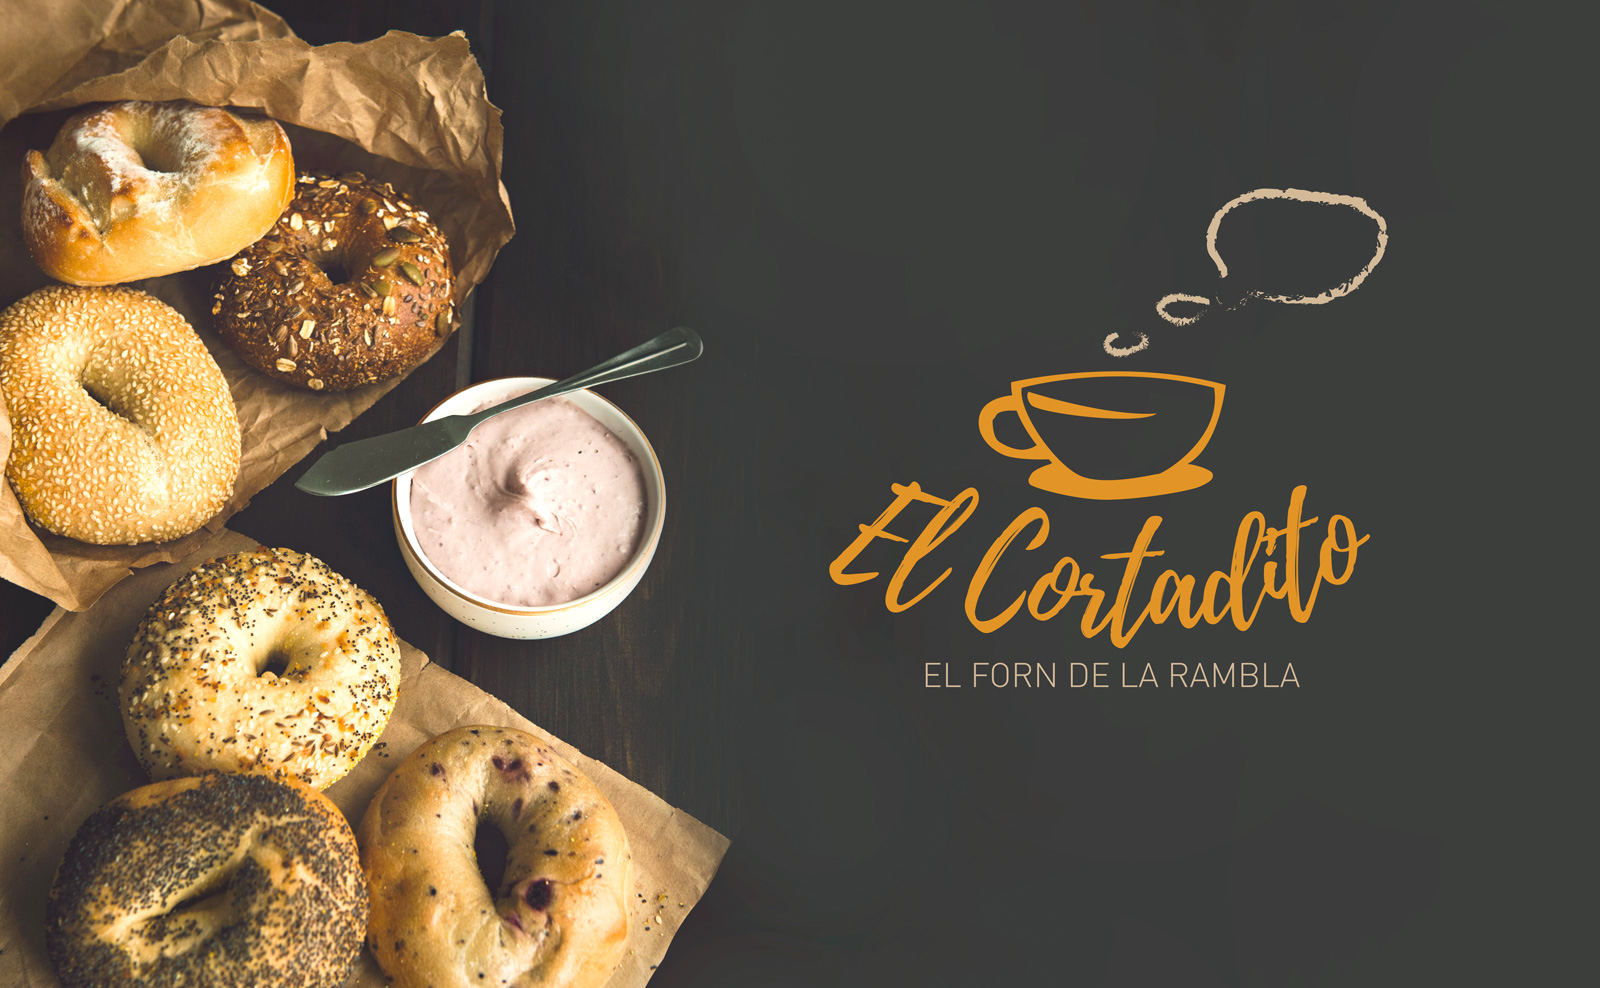 Graphic and creative logo design for coffee-shop and restaurant: El Cortadito